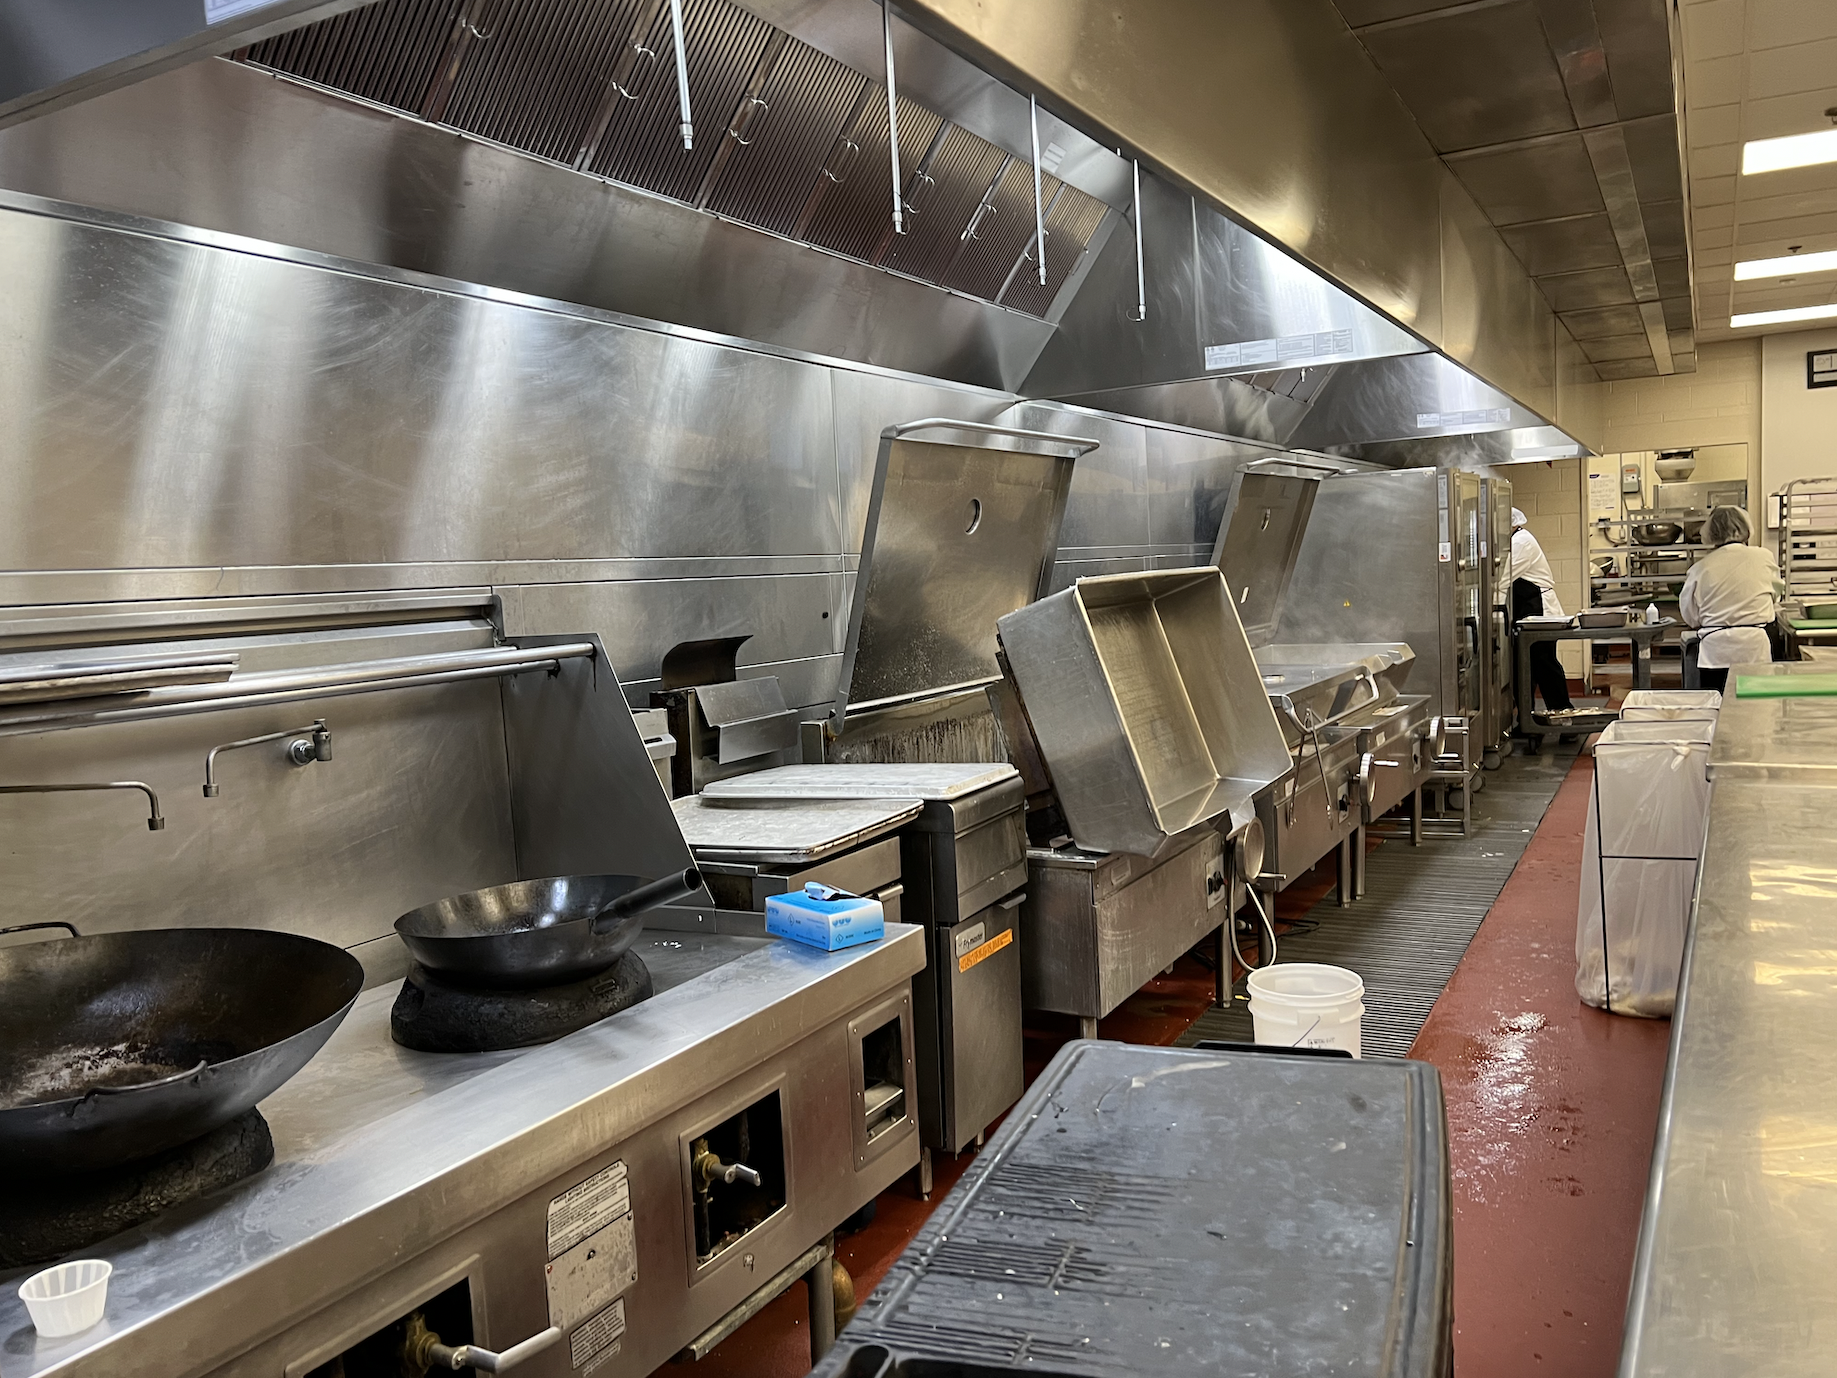 Inside Gate Gourmet's Washington Dulles kitchen.